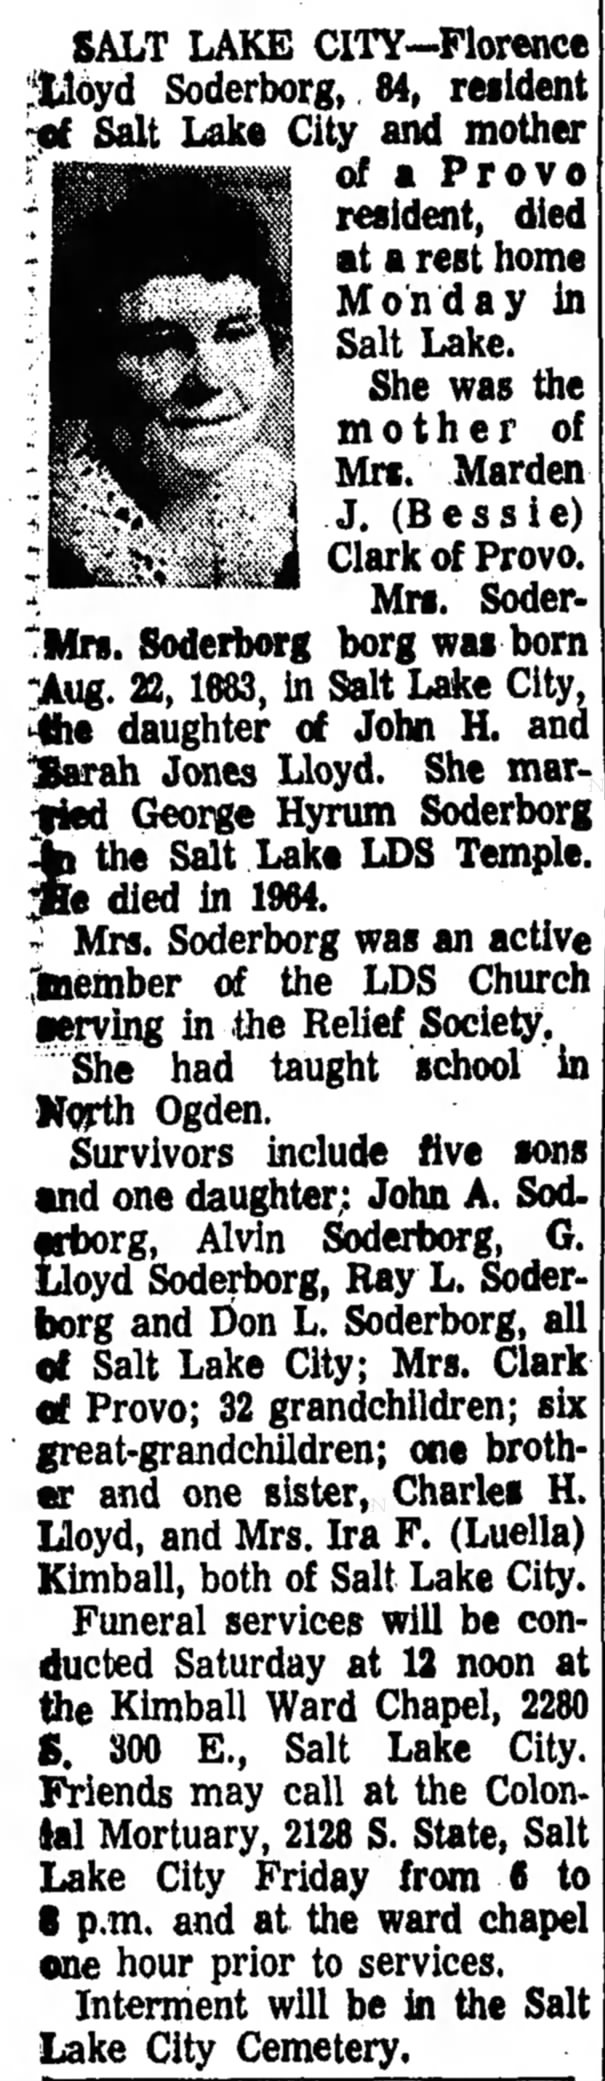 Obituary - Florence Lloyd Soderborg